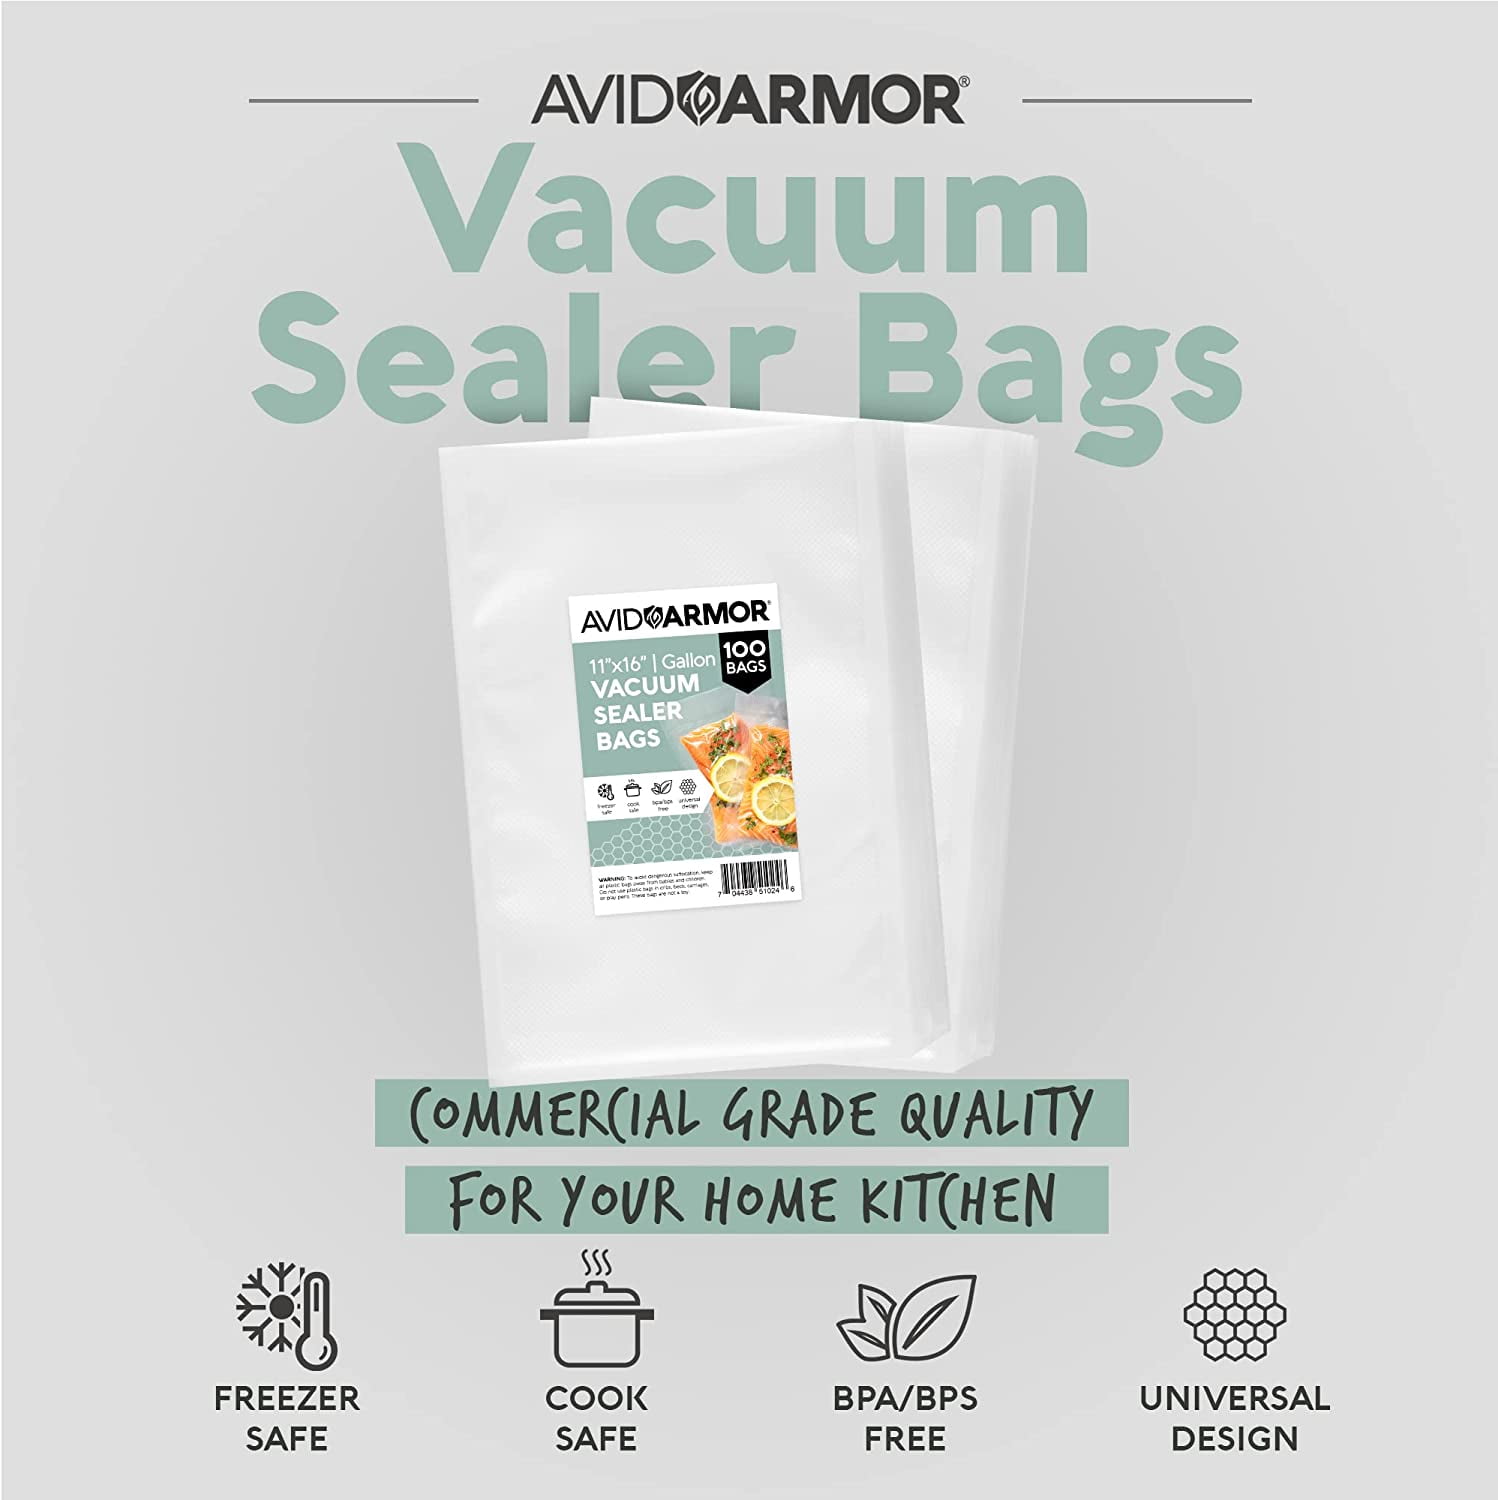 100 GALLON Vacuum Sealer Bags 11x16 Precut Embossed Food Saver Storage  Package